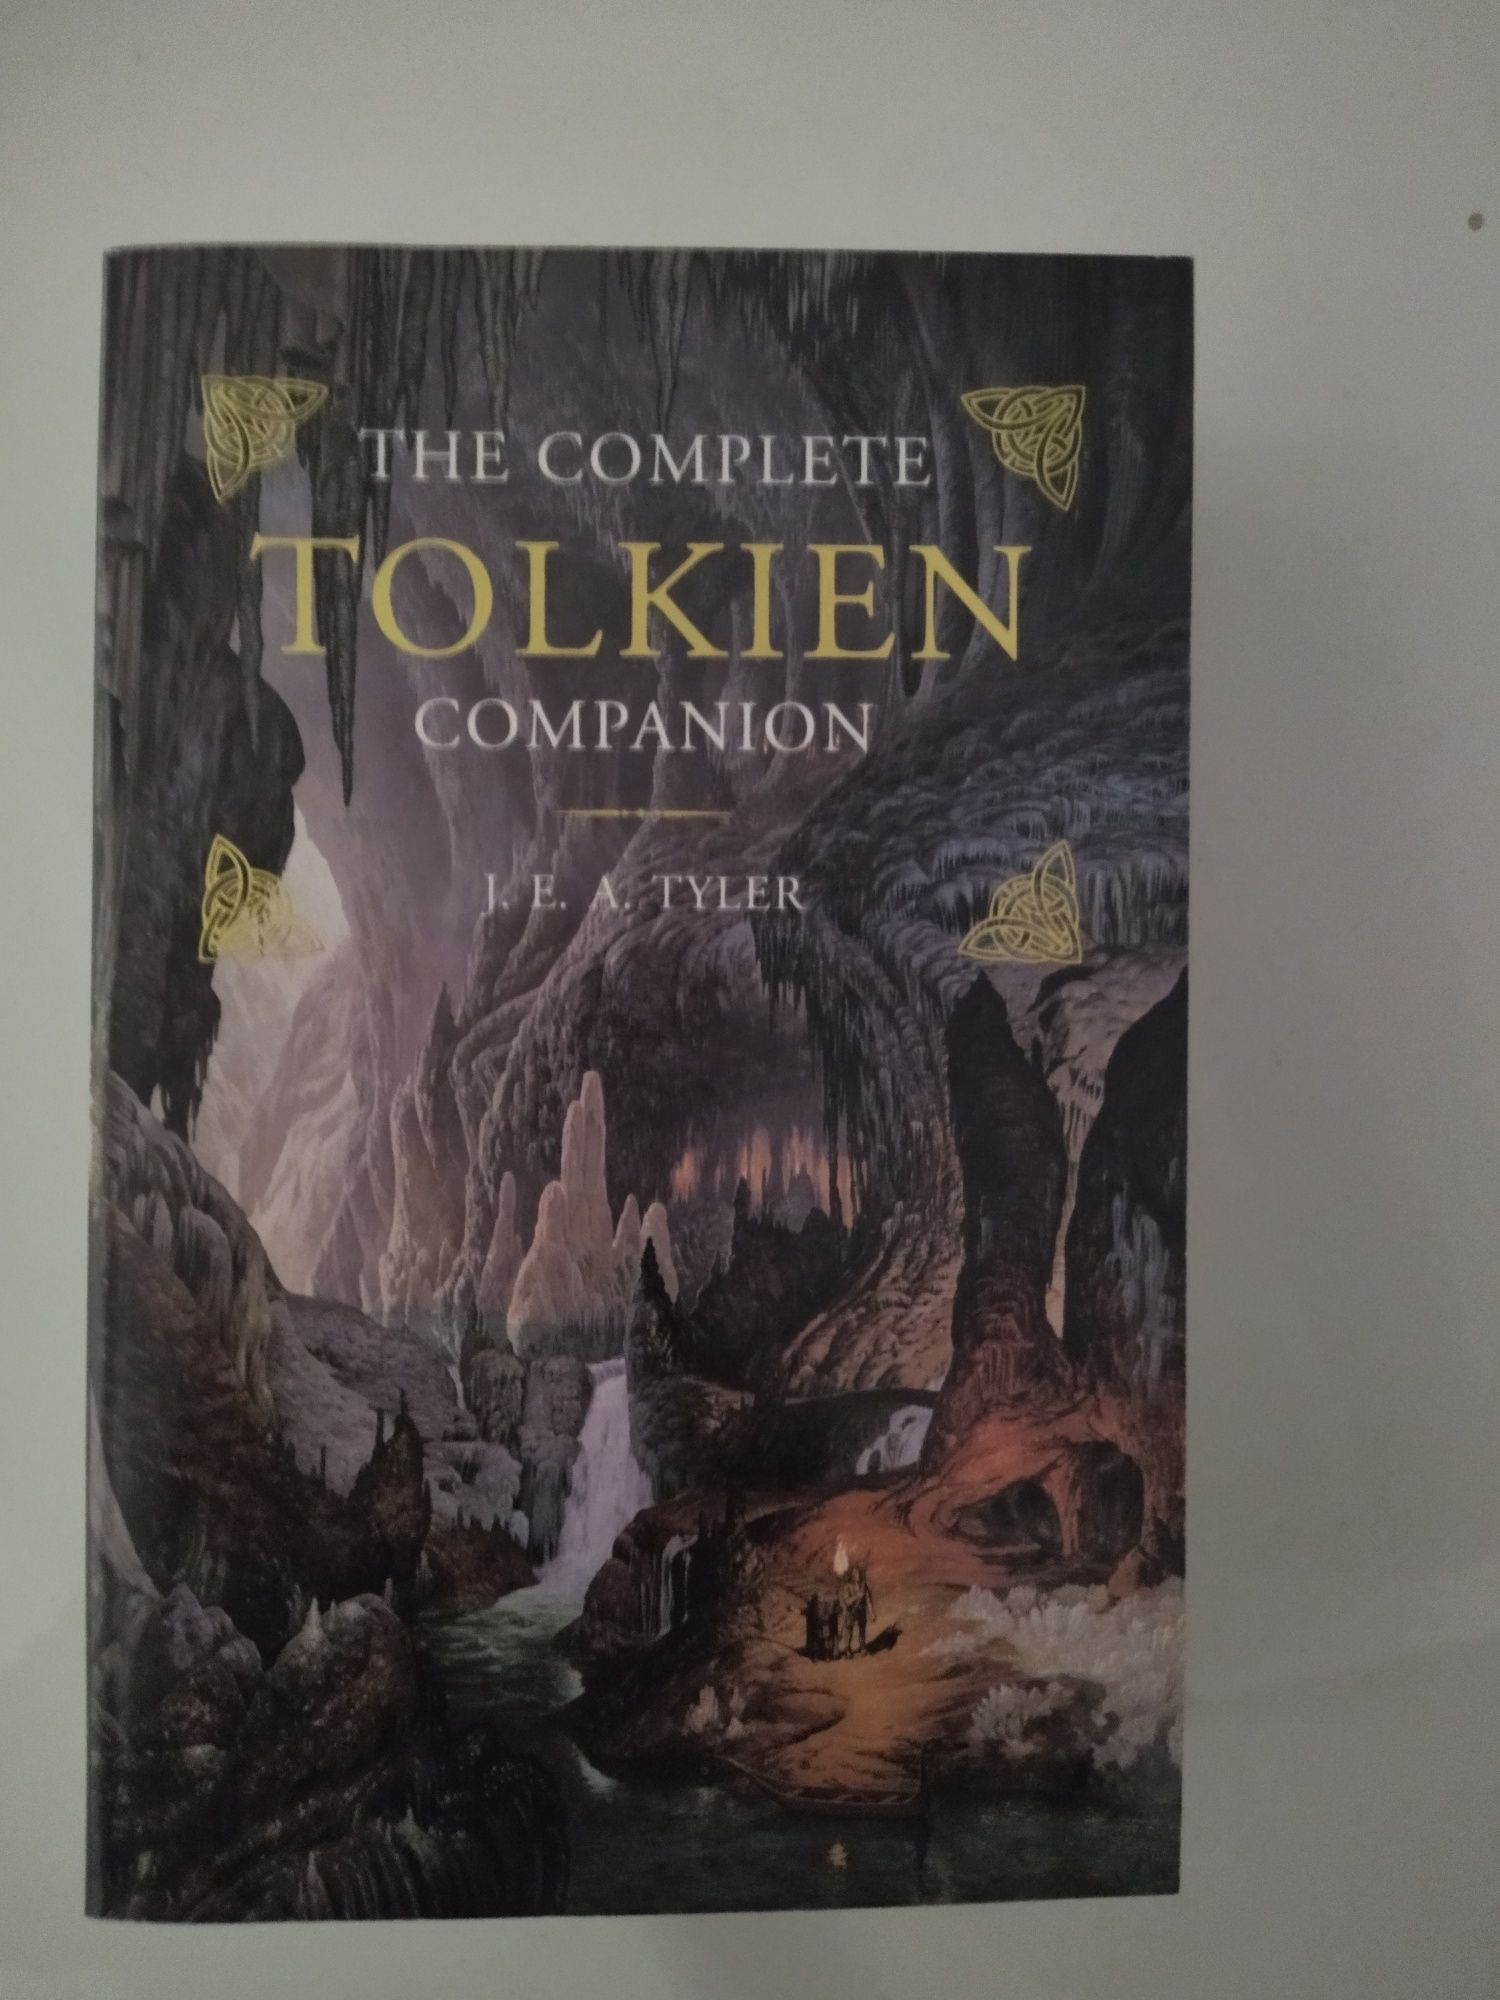 The Complete Tolkien companion